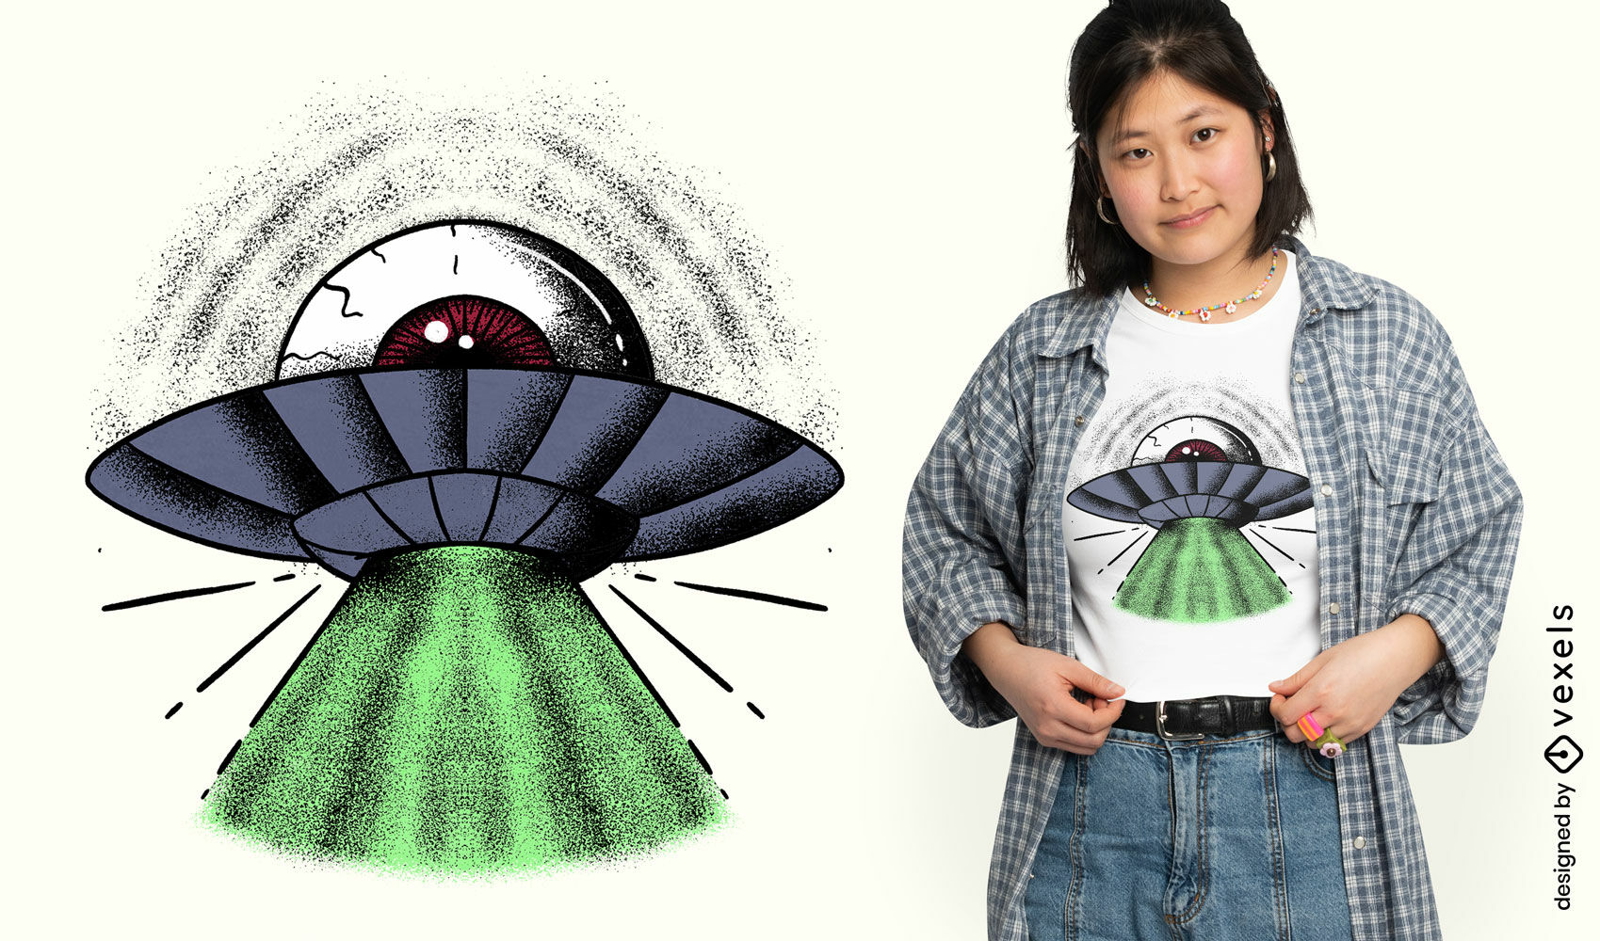 Dise?o de camiseta trippy de nave espacial alien?gena